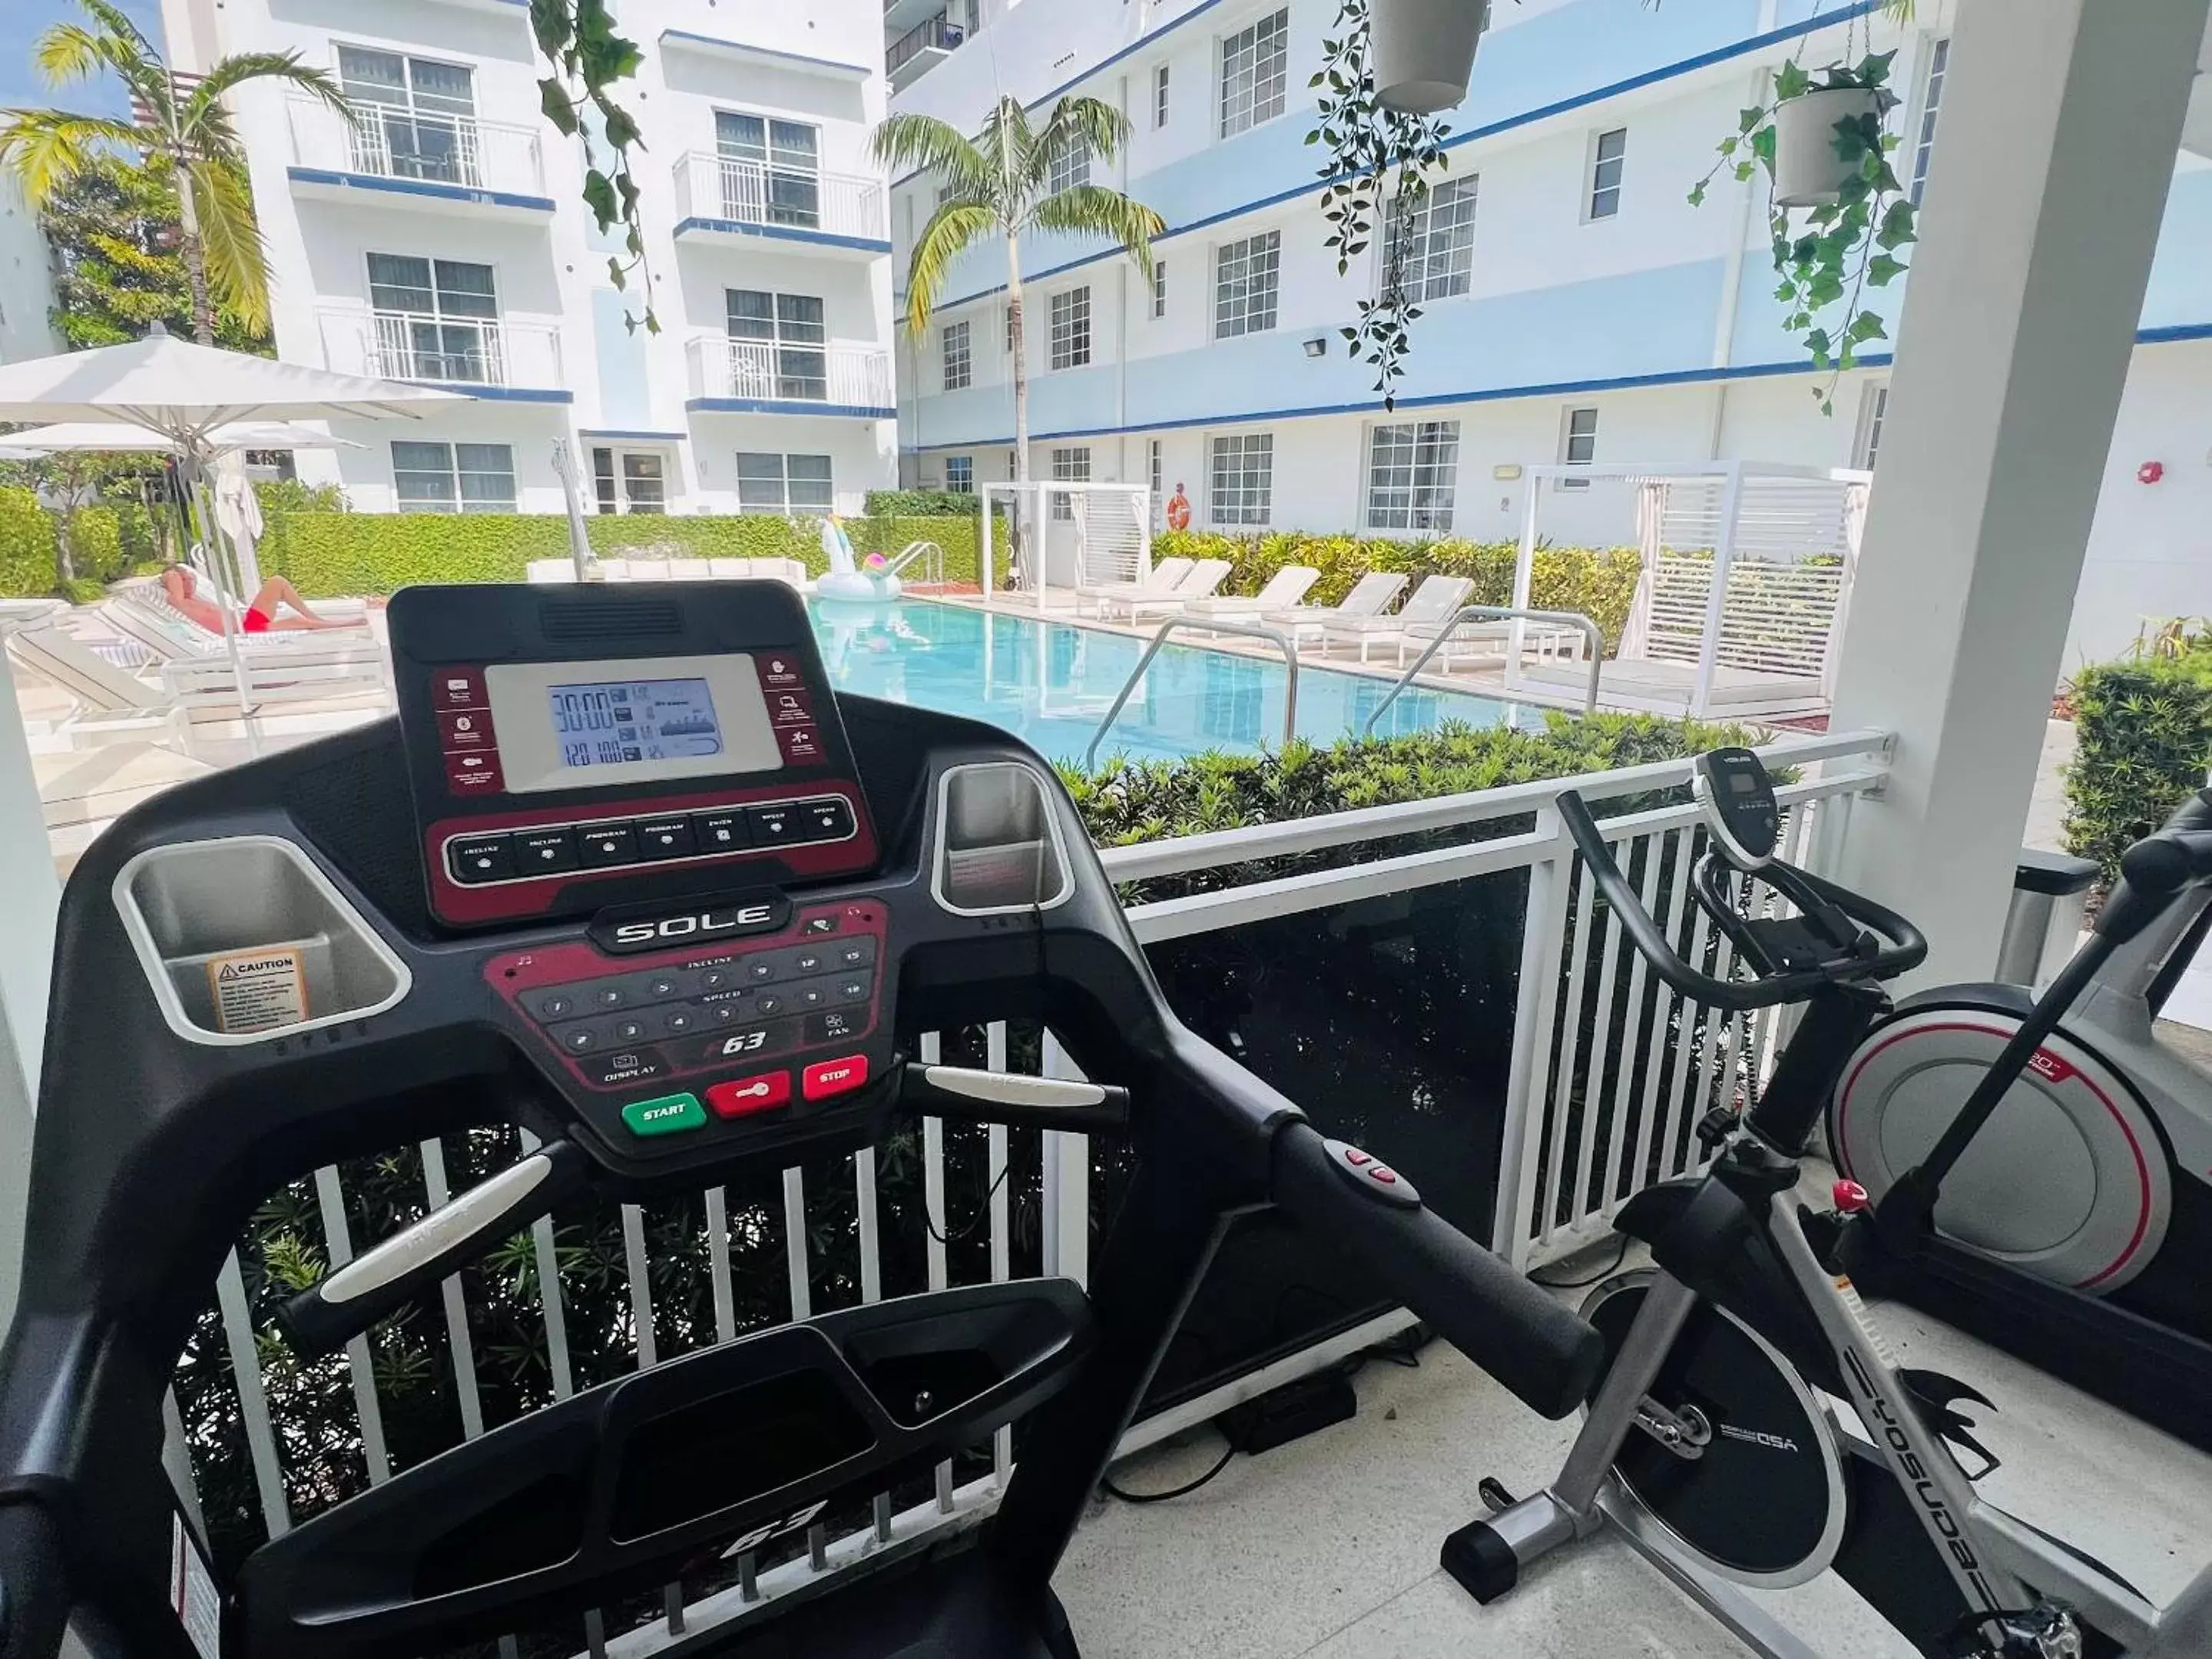 Fitness centre/facilities, Fitness Center/Facilities in Pestana South Beach Hotel